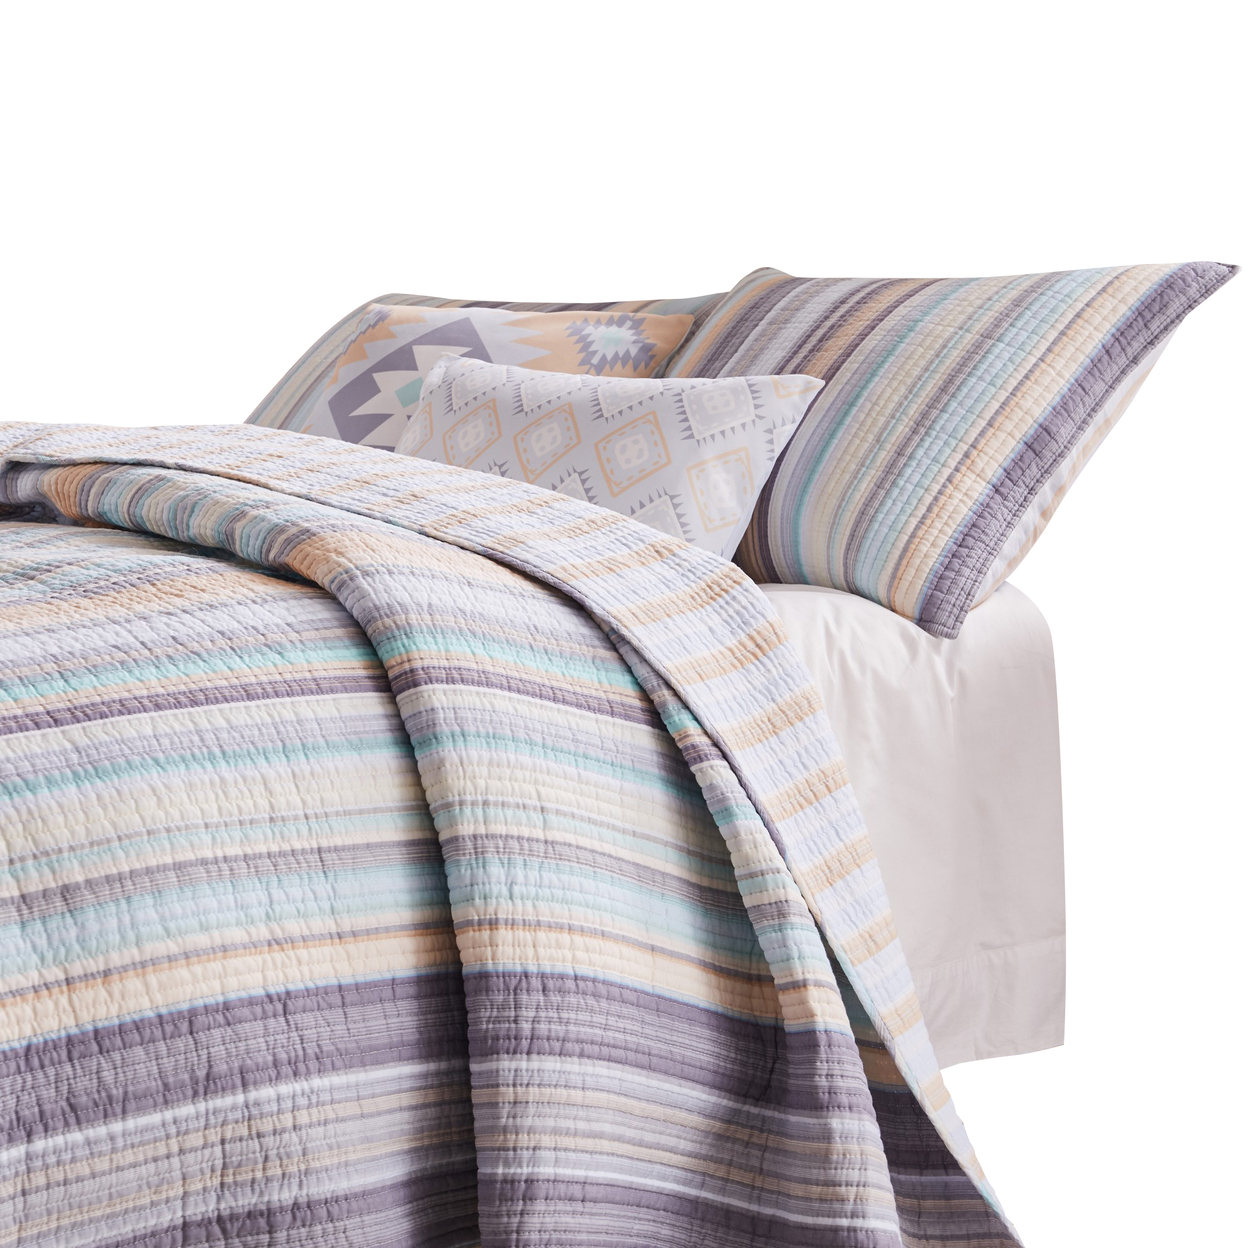 Ysa 36 Inch Quilted King Pillow Sham, Cotton, Reversible Striped Design- Saltoro Sherpi